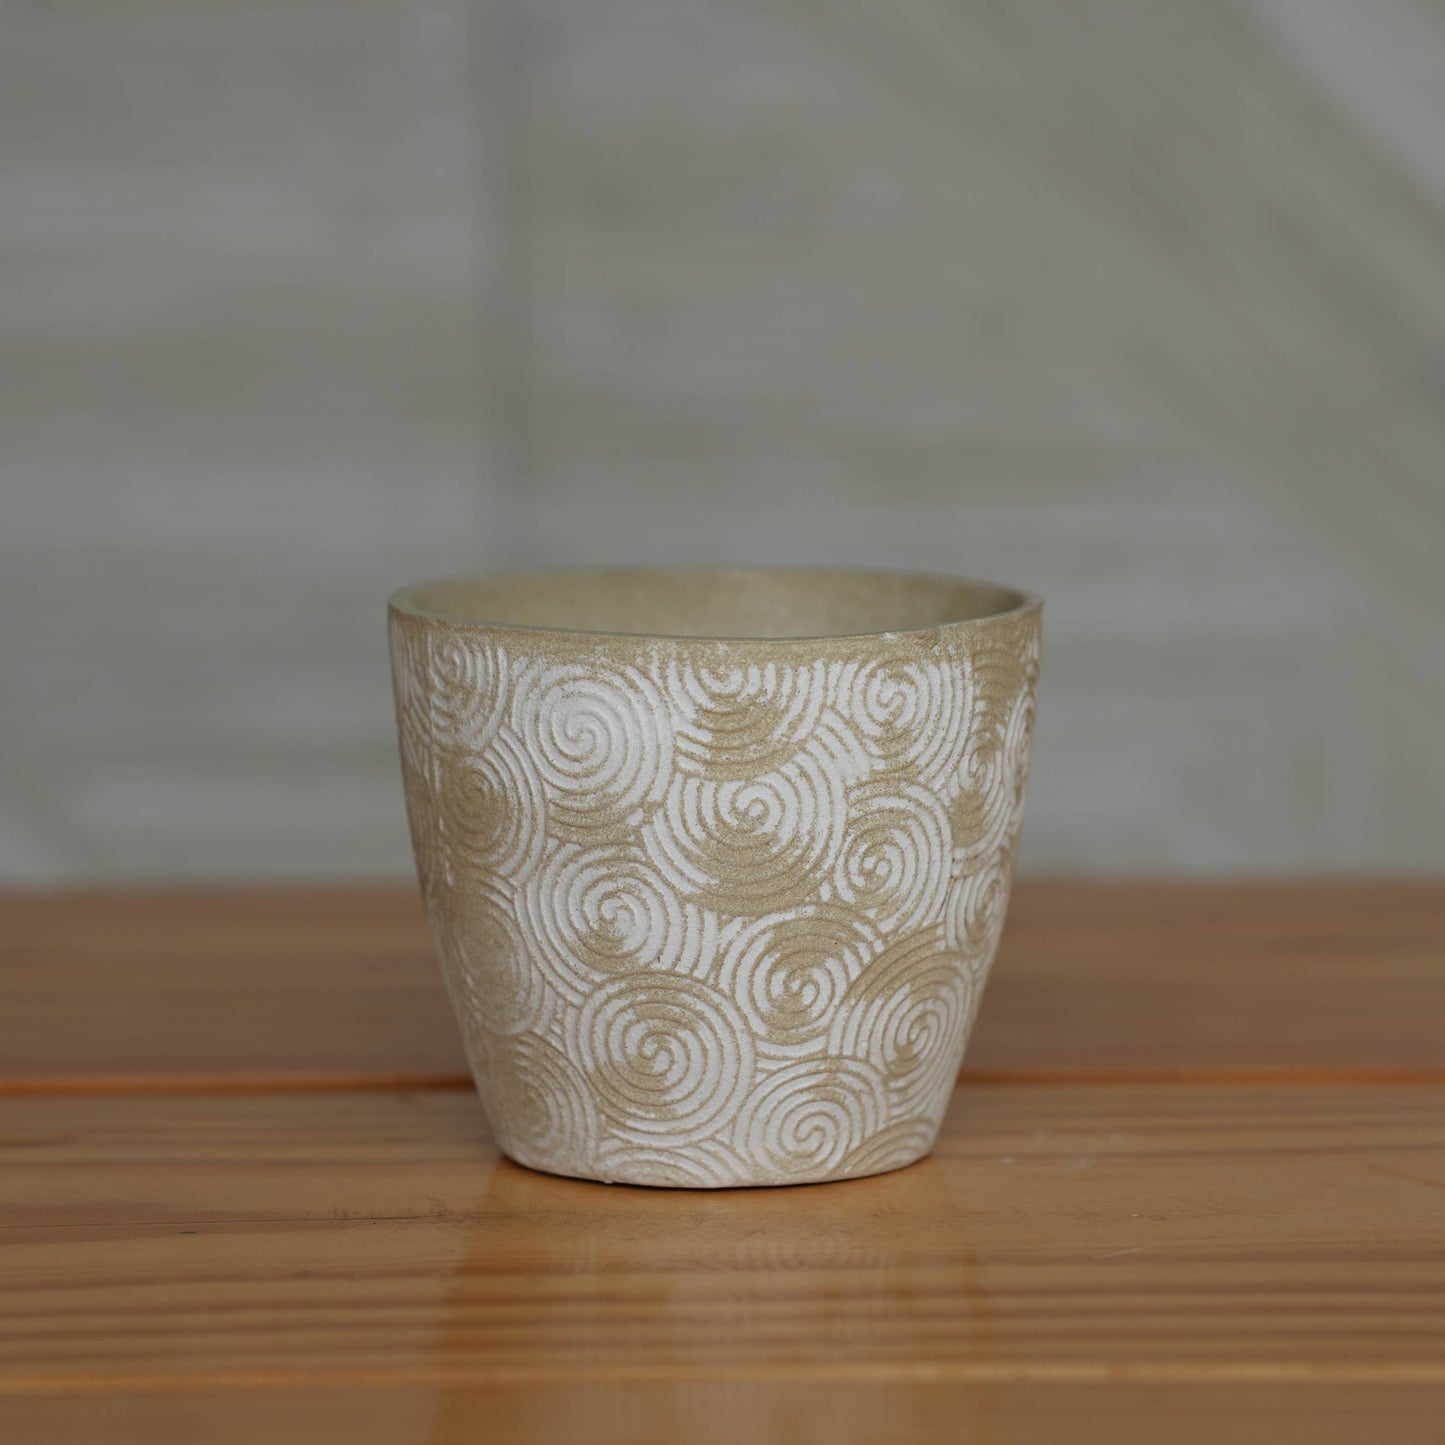 Ceramic Spiral Swirl Textured Planter/ Pot for Plants